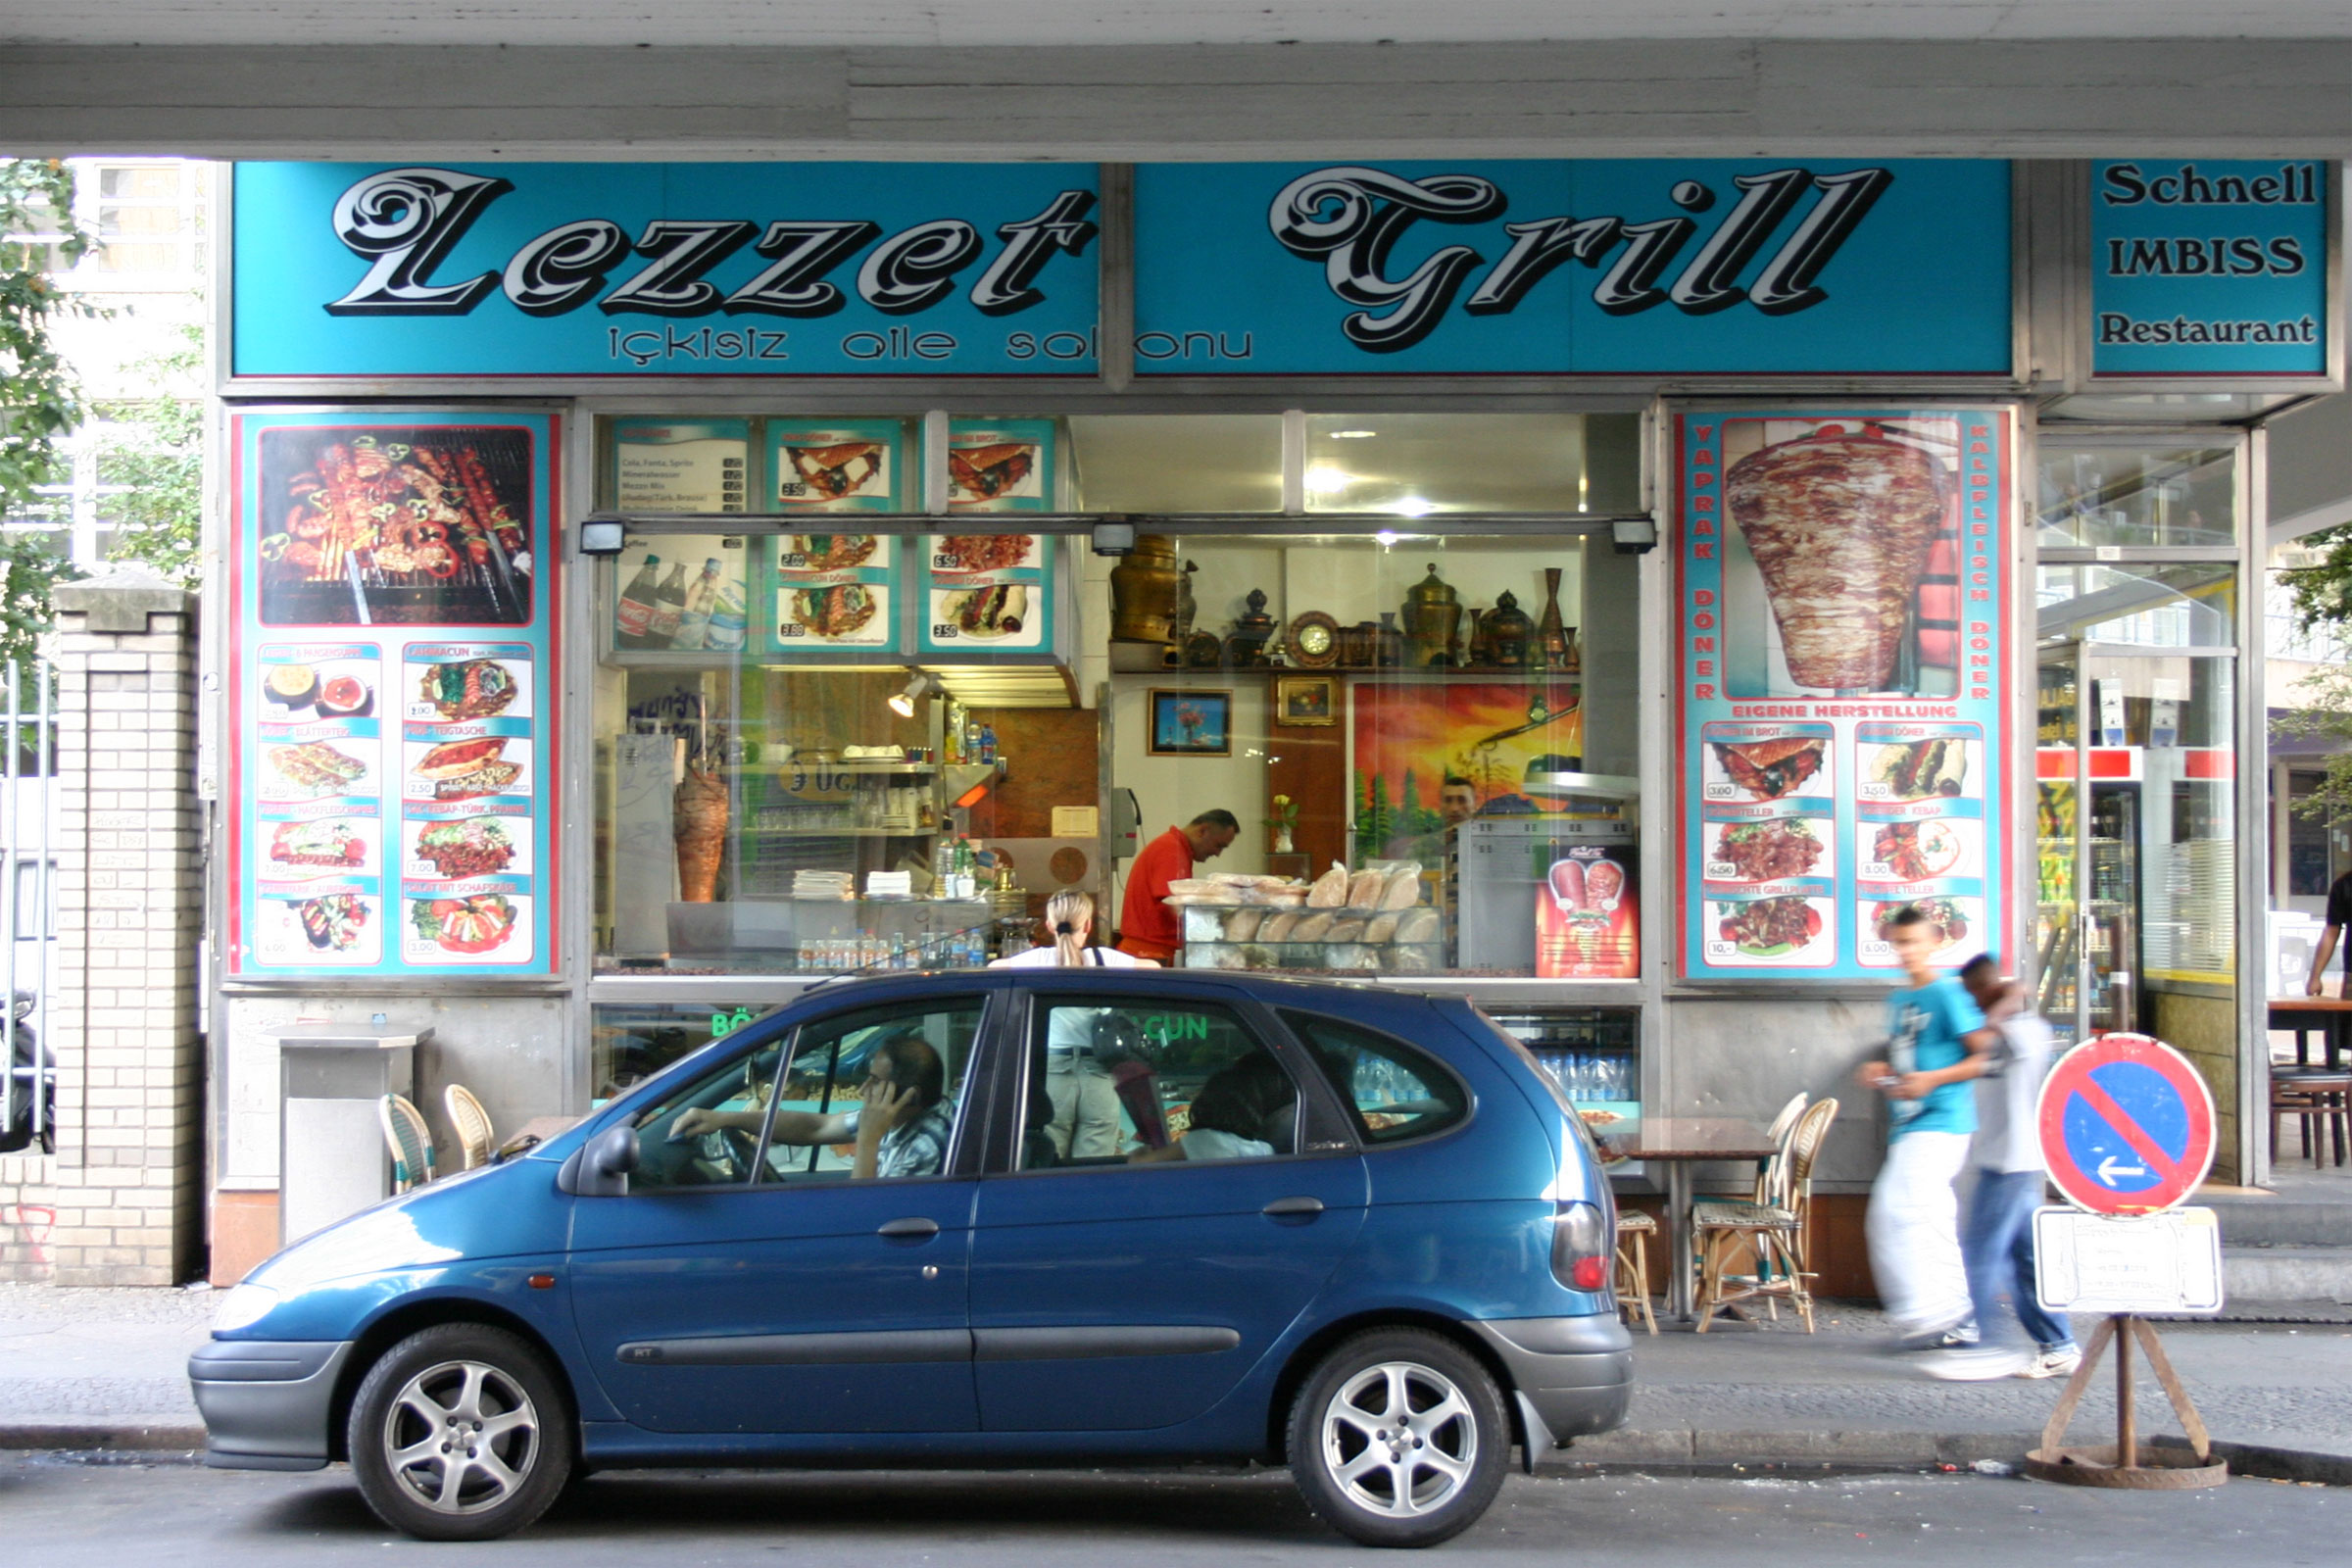 Lezzet Grill Schnellimbiss Restaurant, Berlin Fonts In